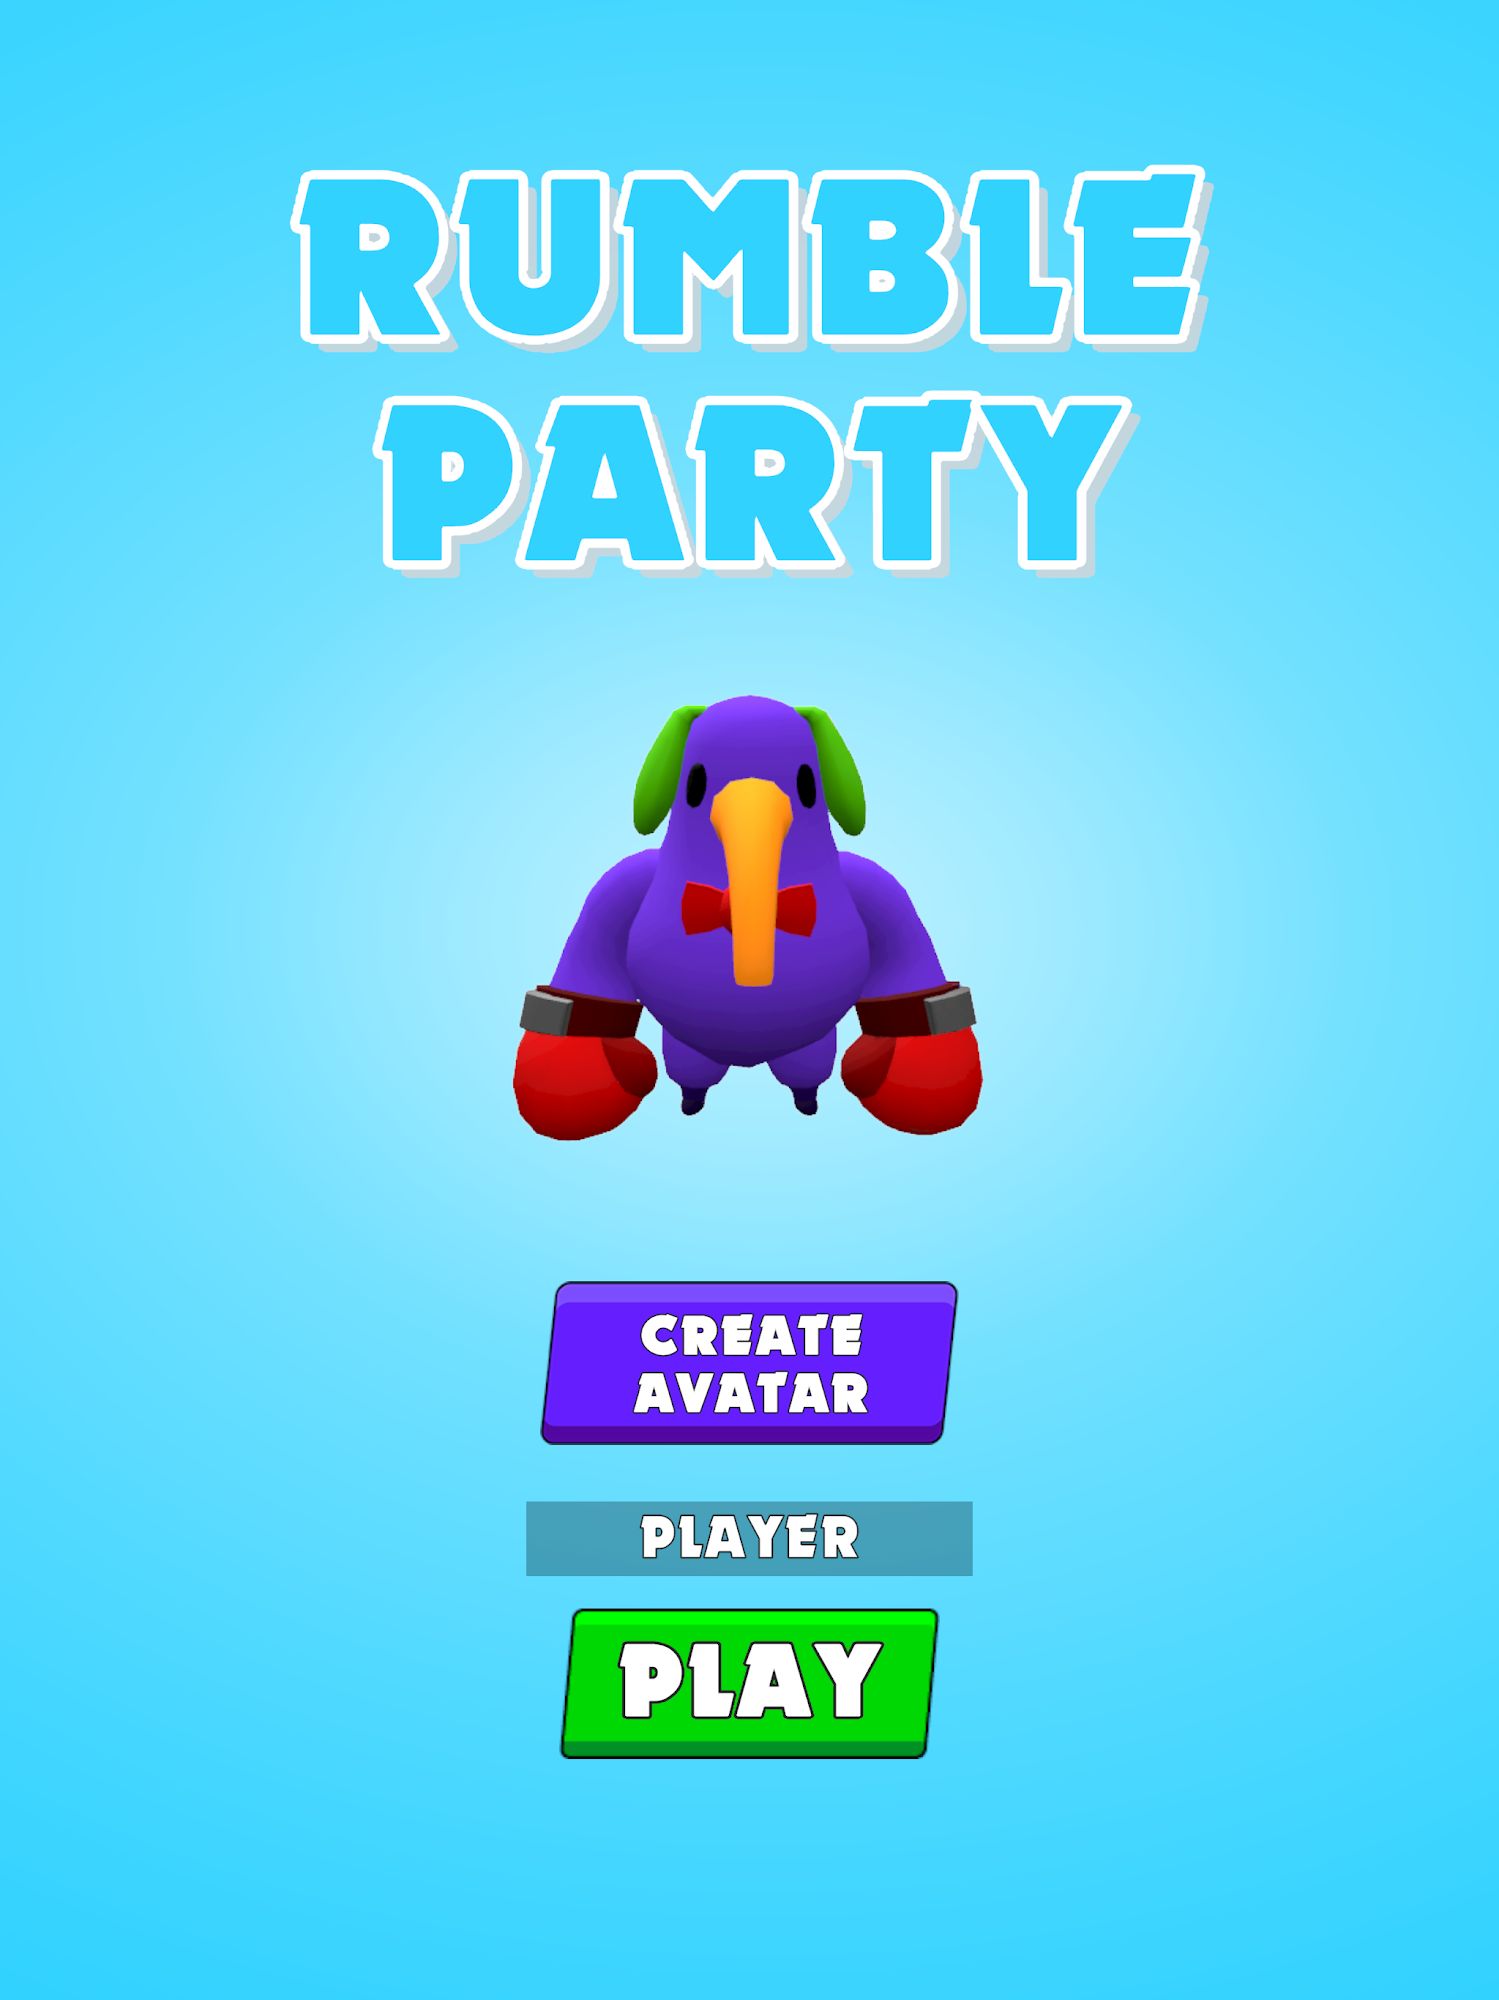 Descargar Rumble Party gratis para Android.